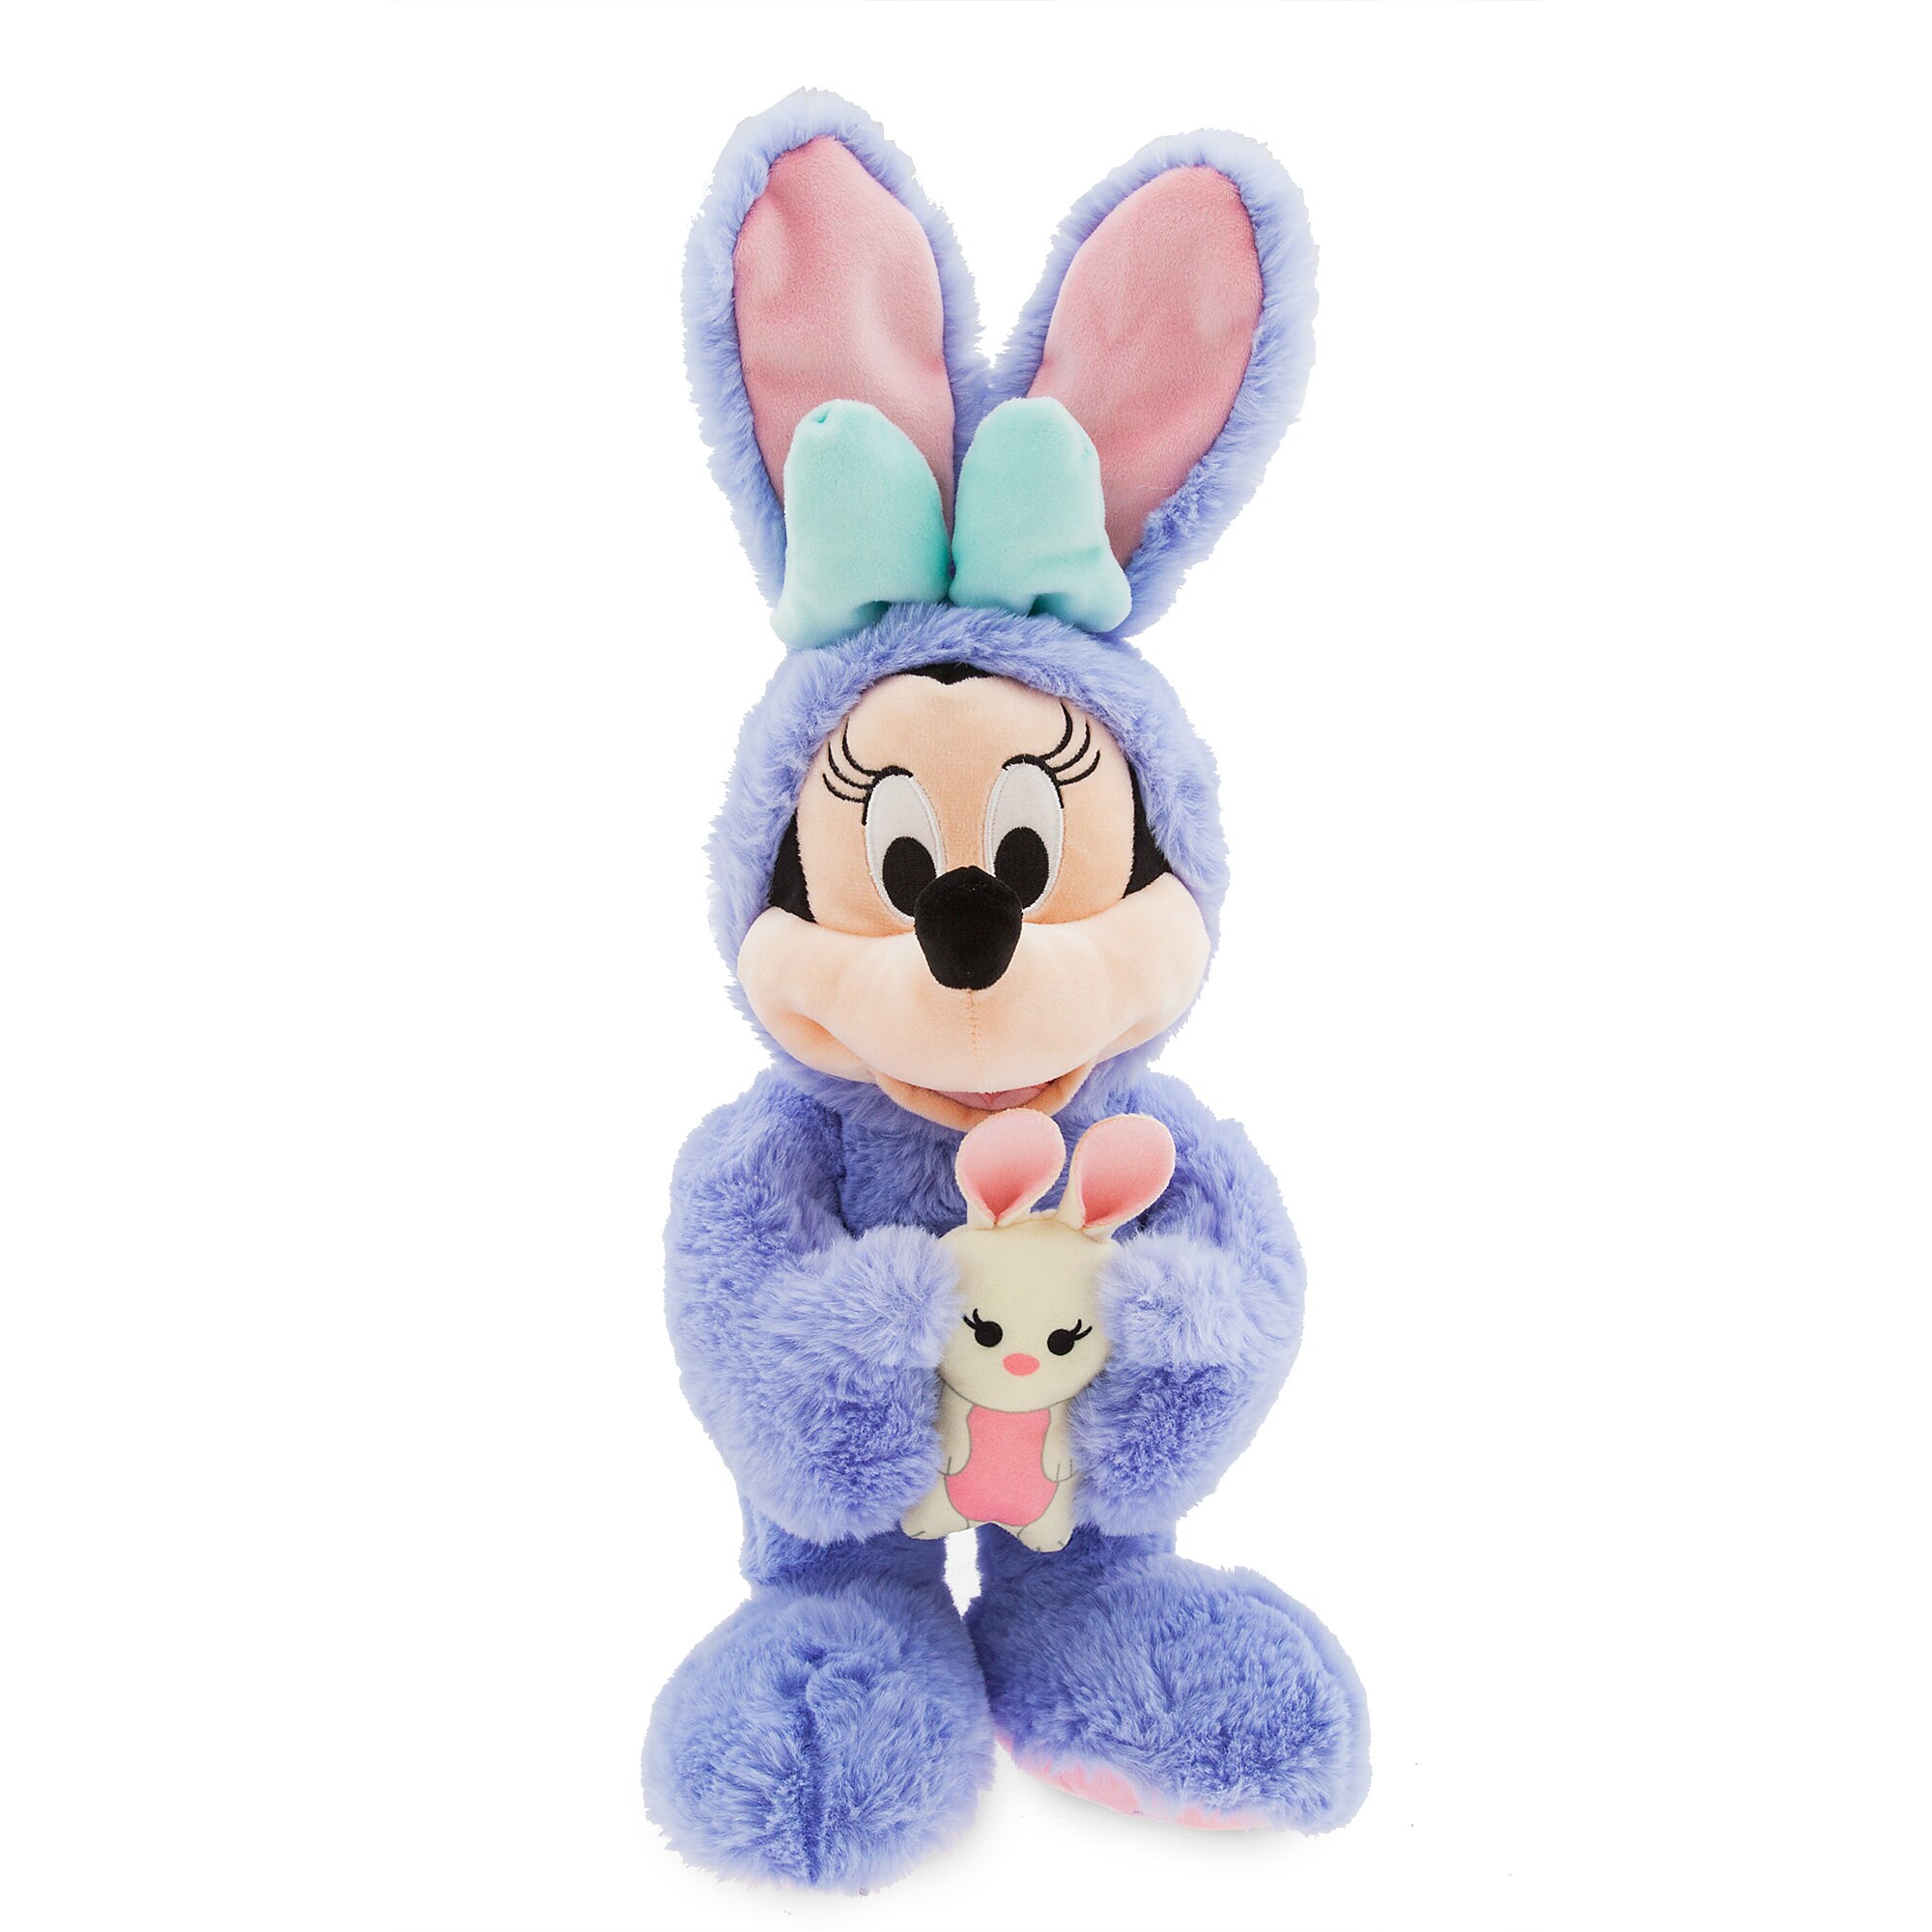 Minnie Mouse Plush Bunny 2019 - Medium - 18'' - Personalized